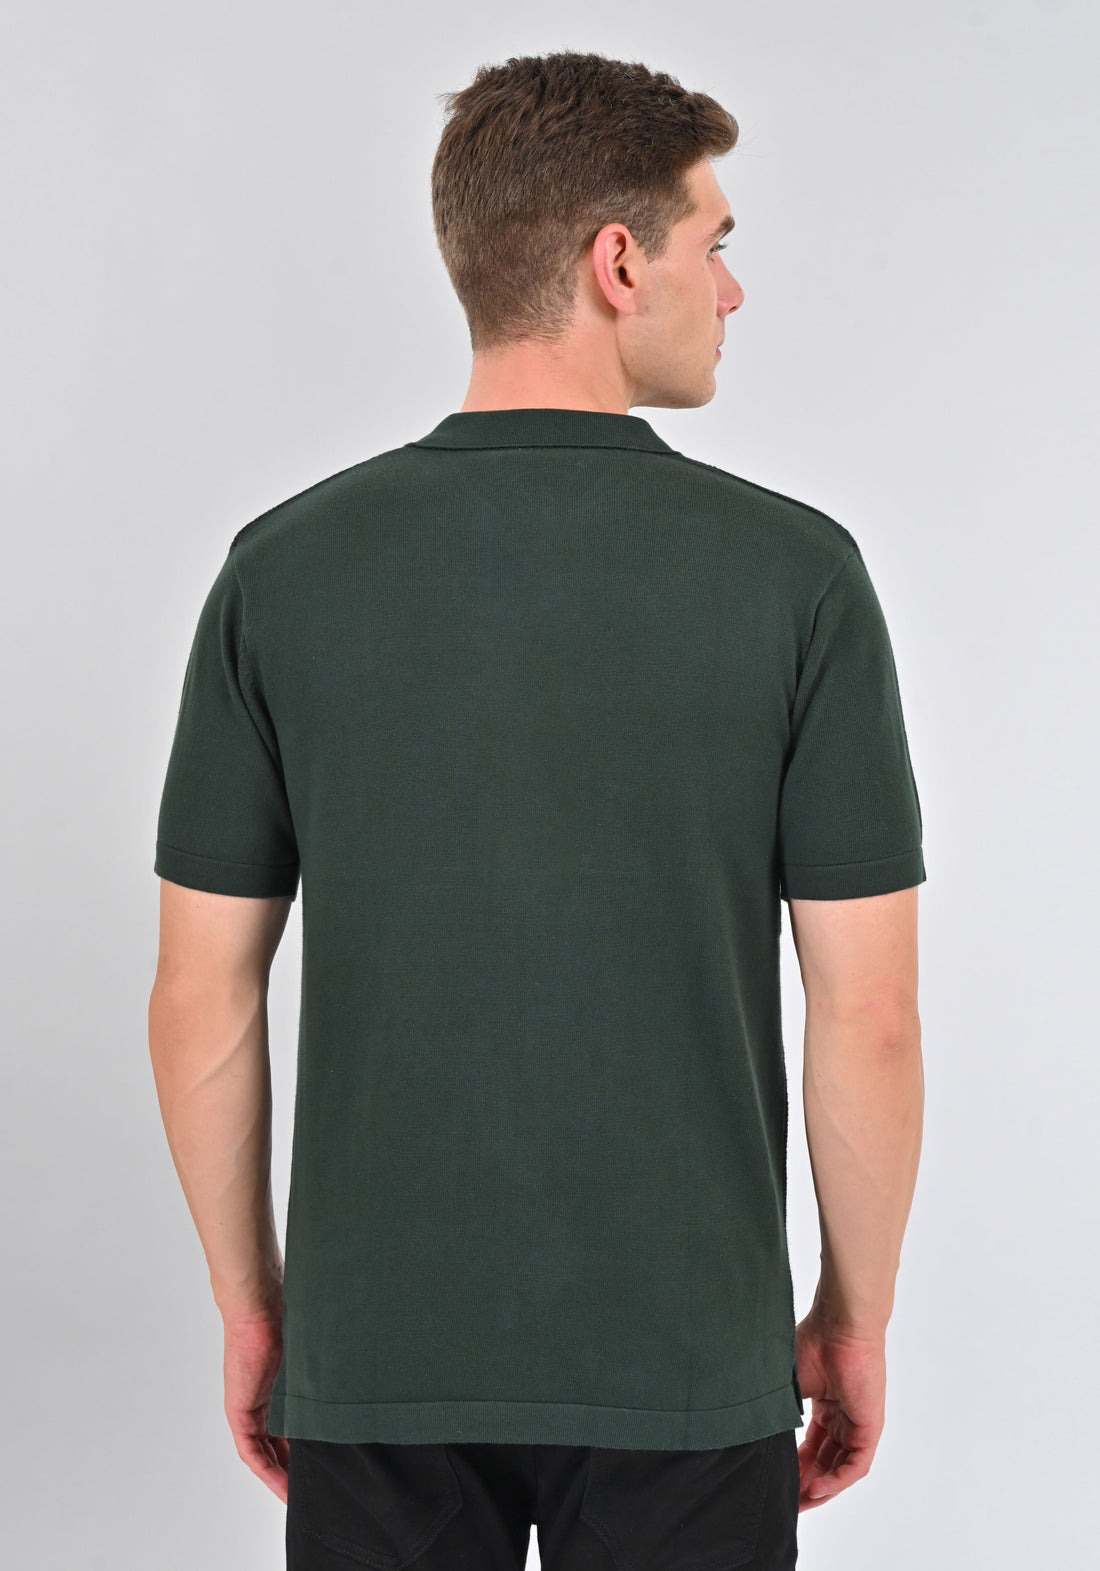 Nativebull Green Color Cotton Half Sleeve Collar Neck T Shirt